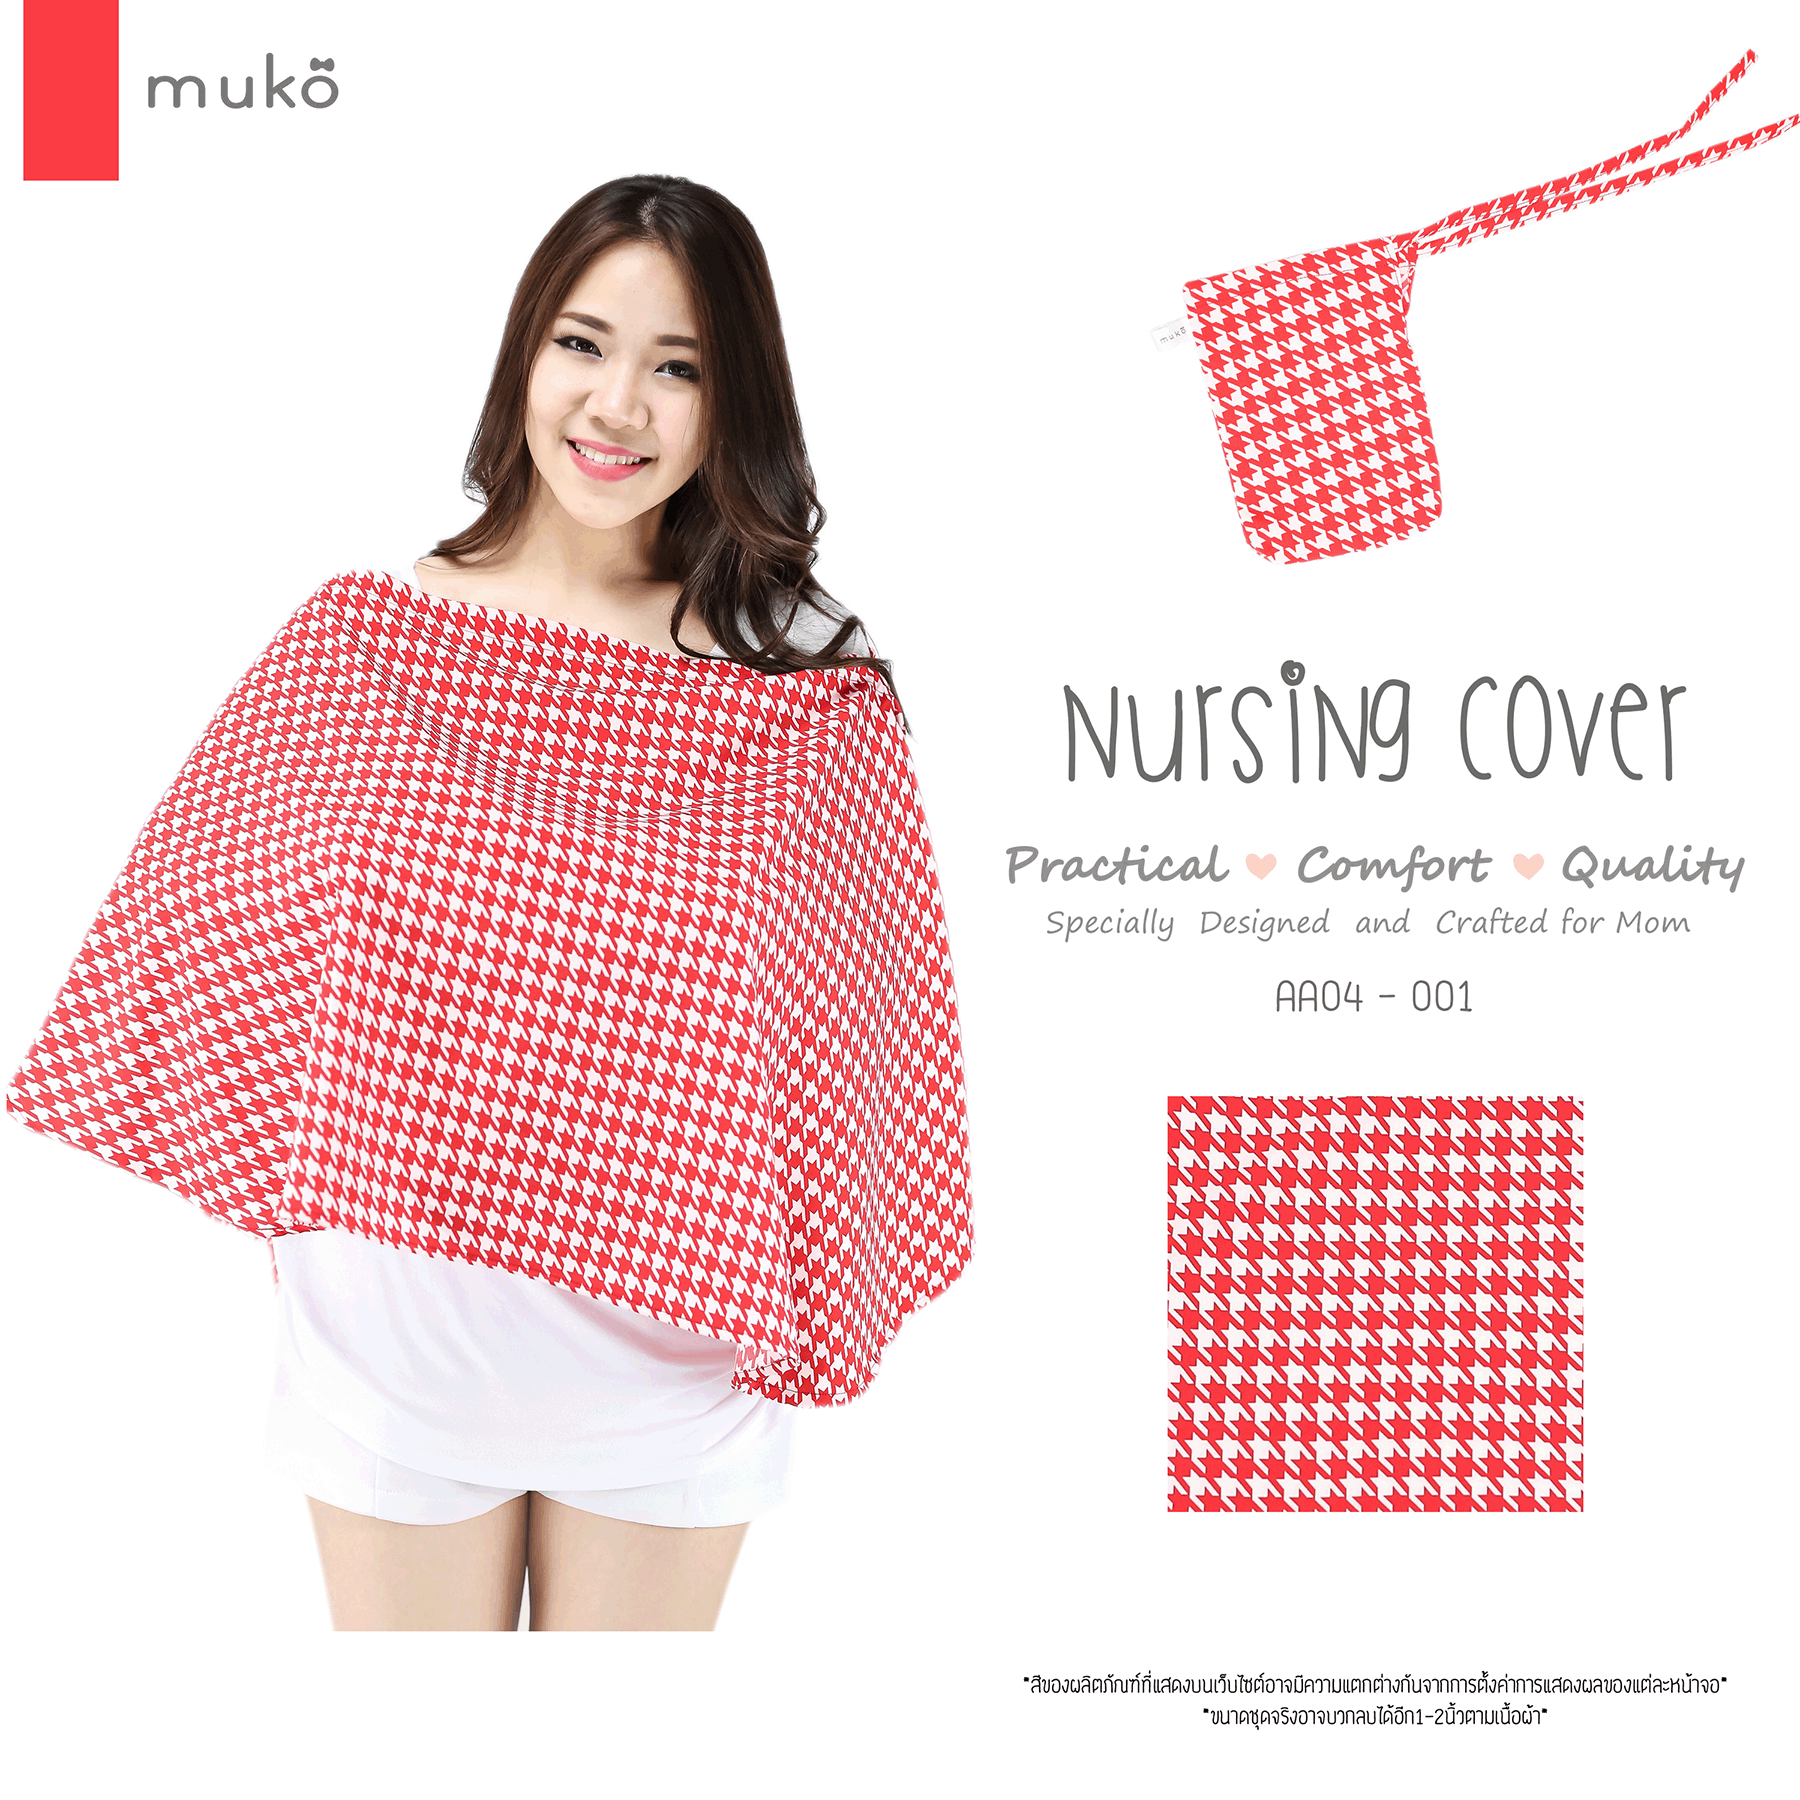 Muko Nursing Cover ผ้าคลุมให้นม AA04-001 ชิโนริ